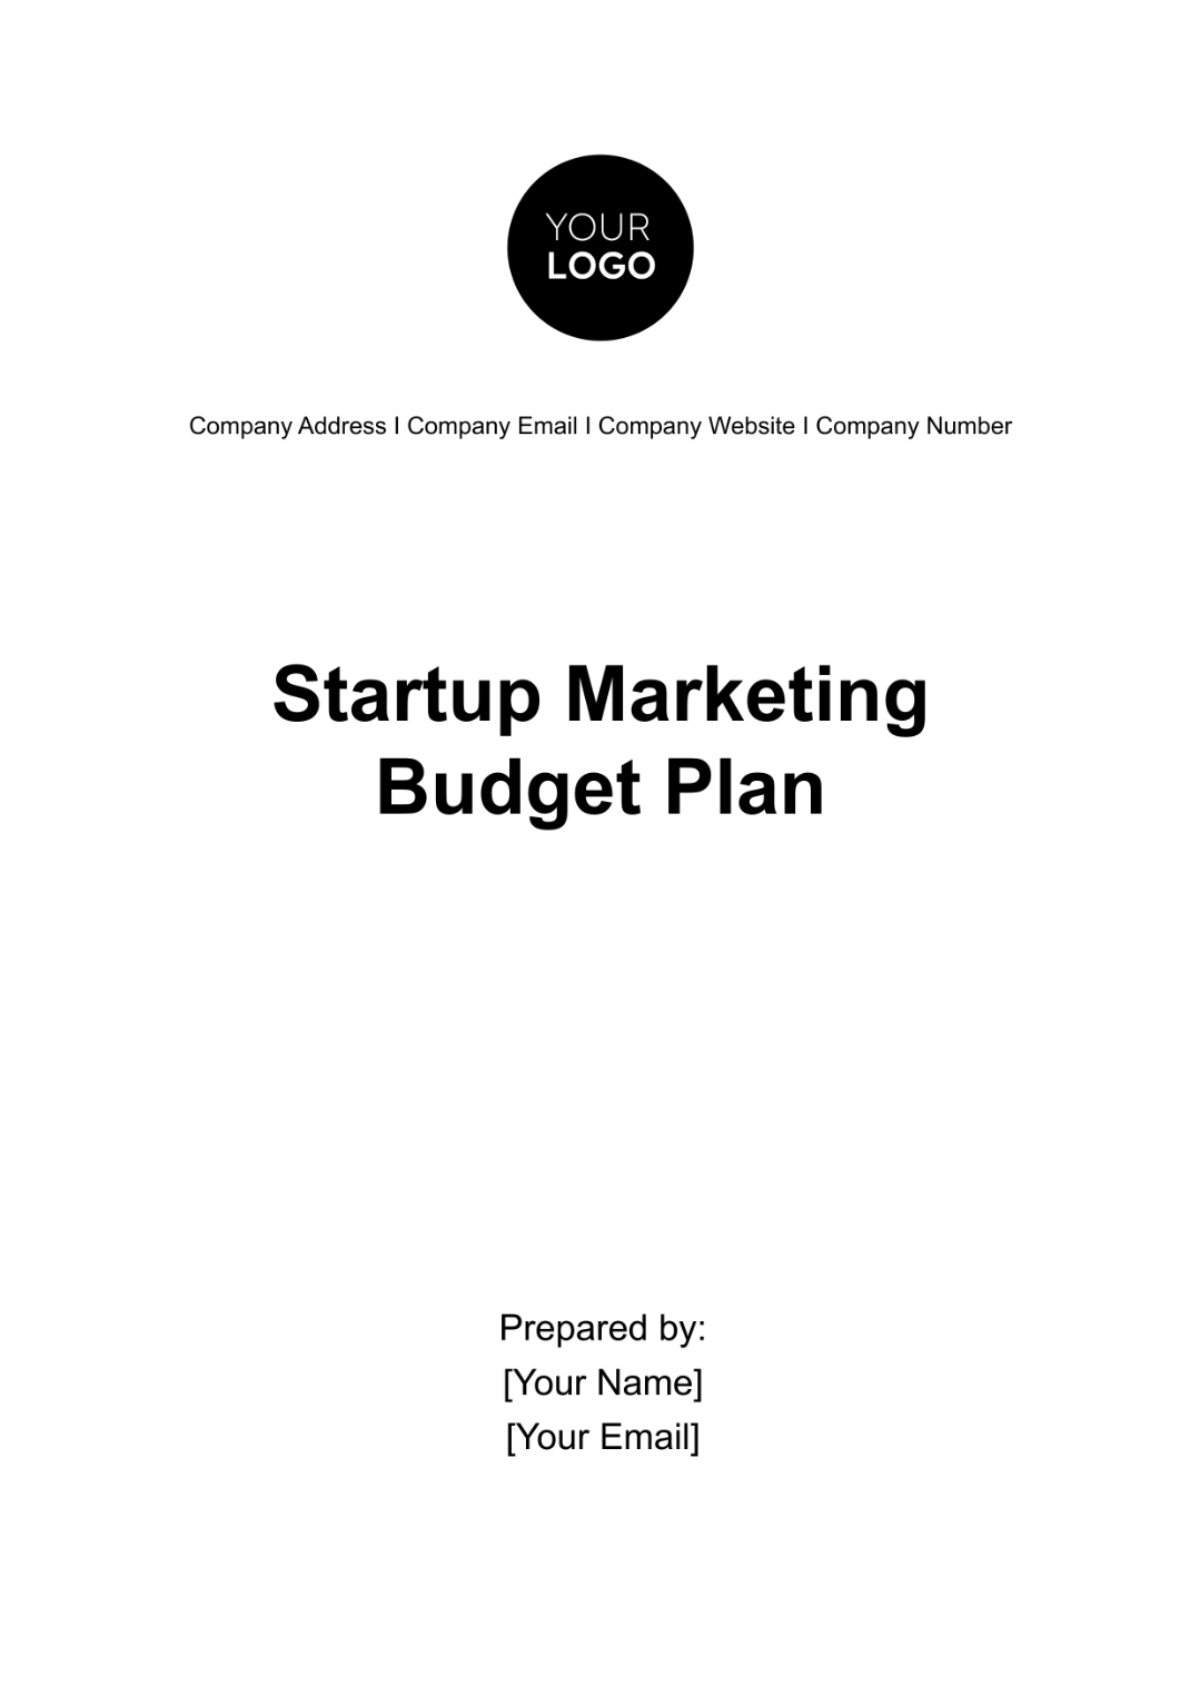 Startup Marketing Budget Plan Template